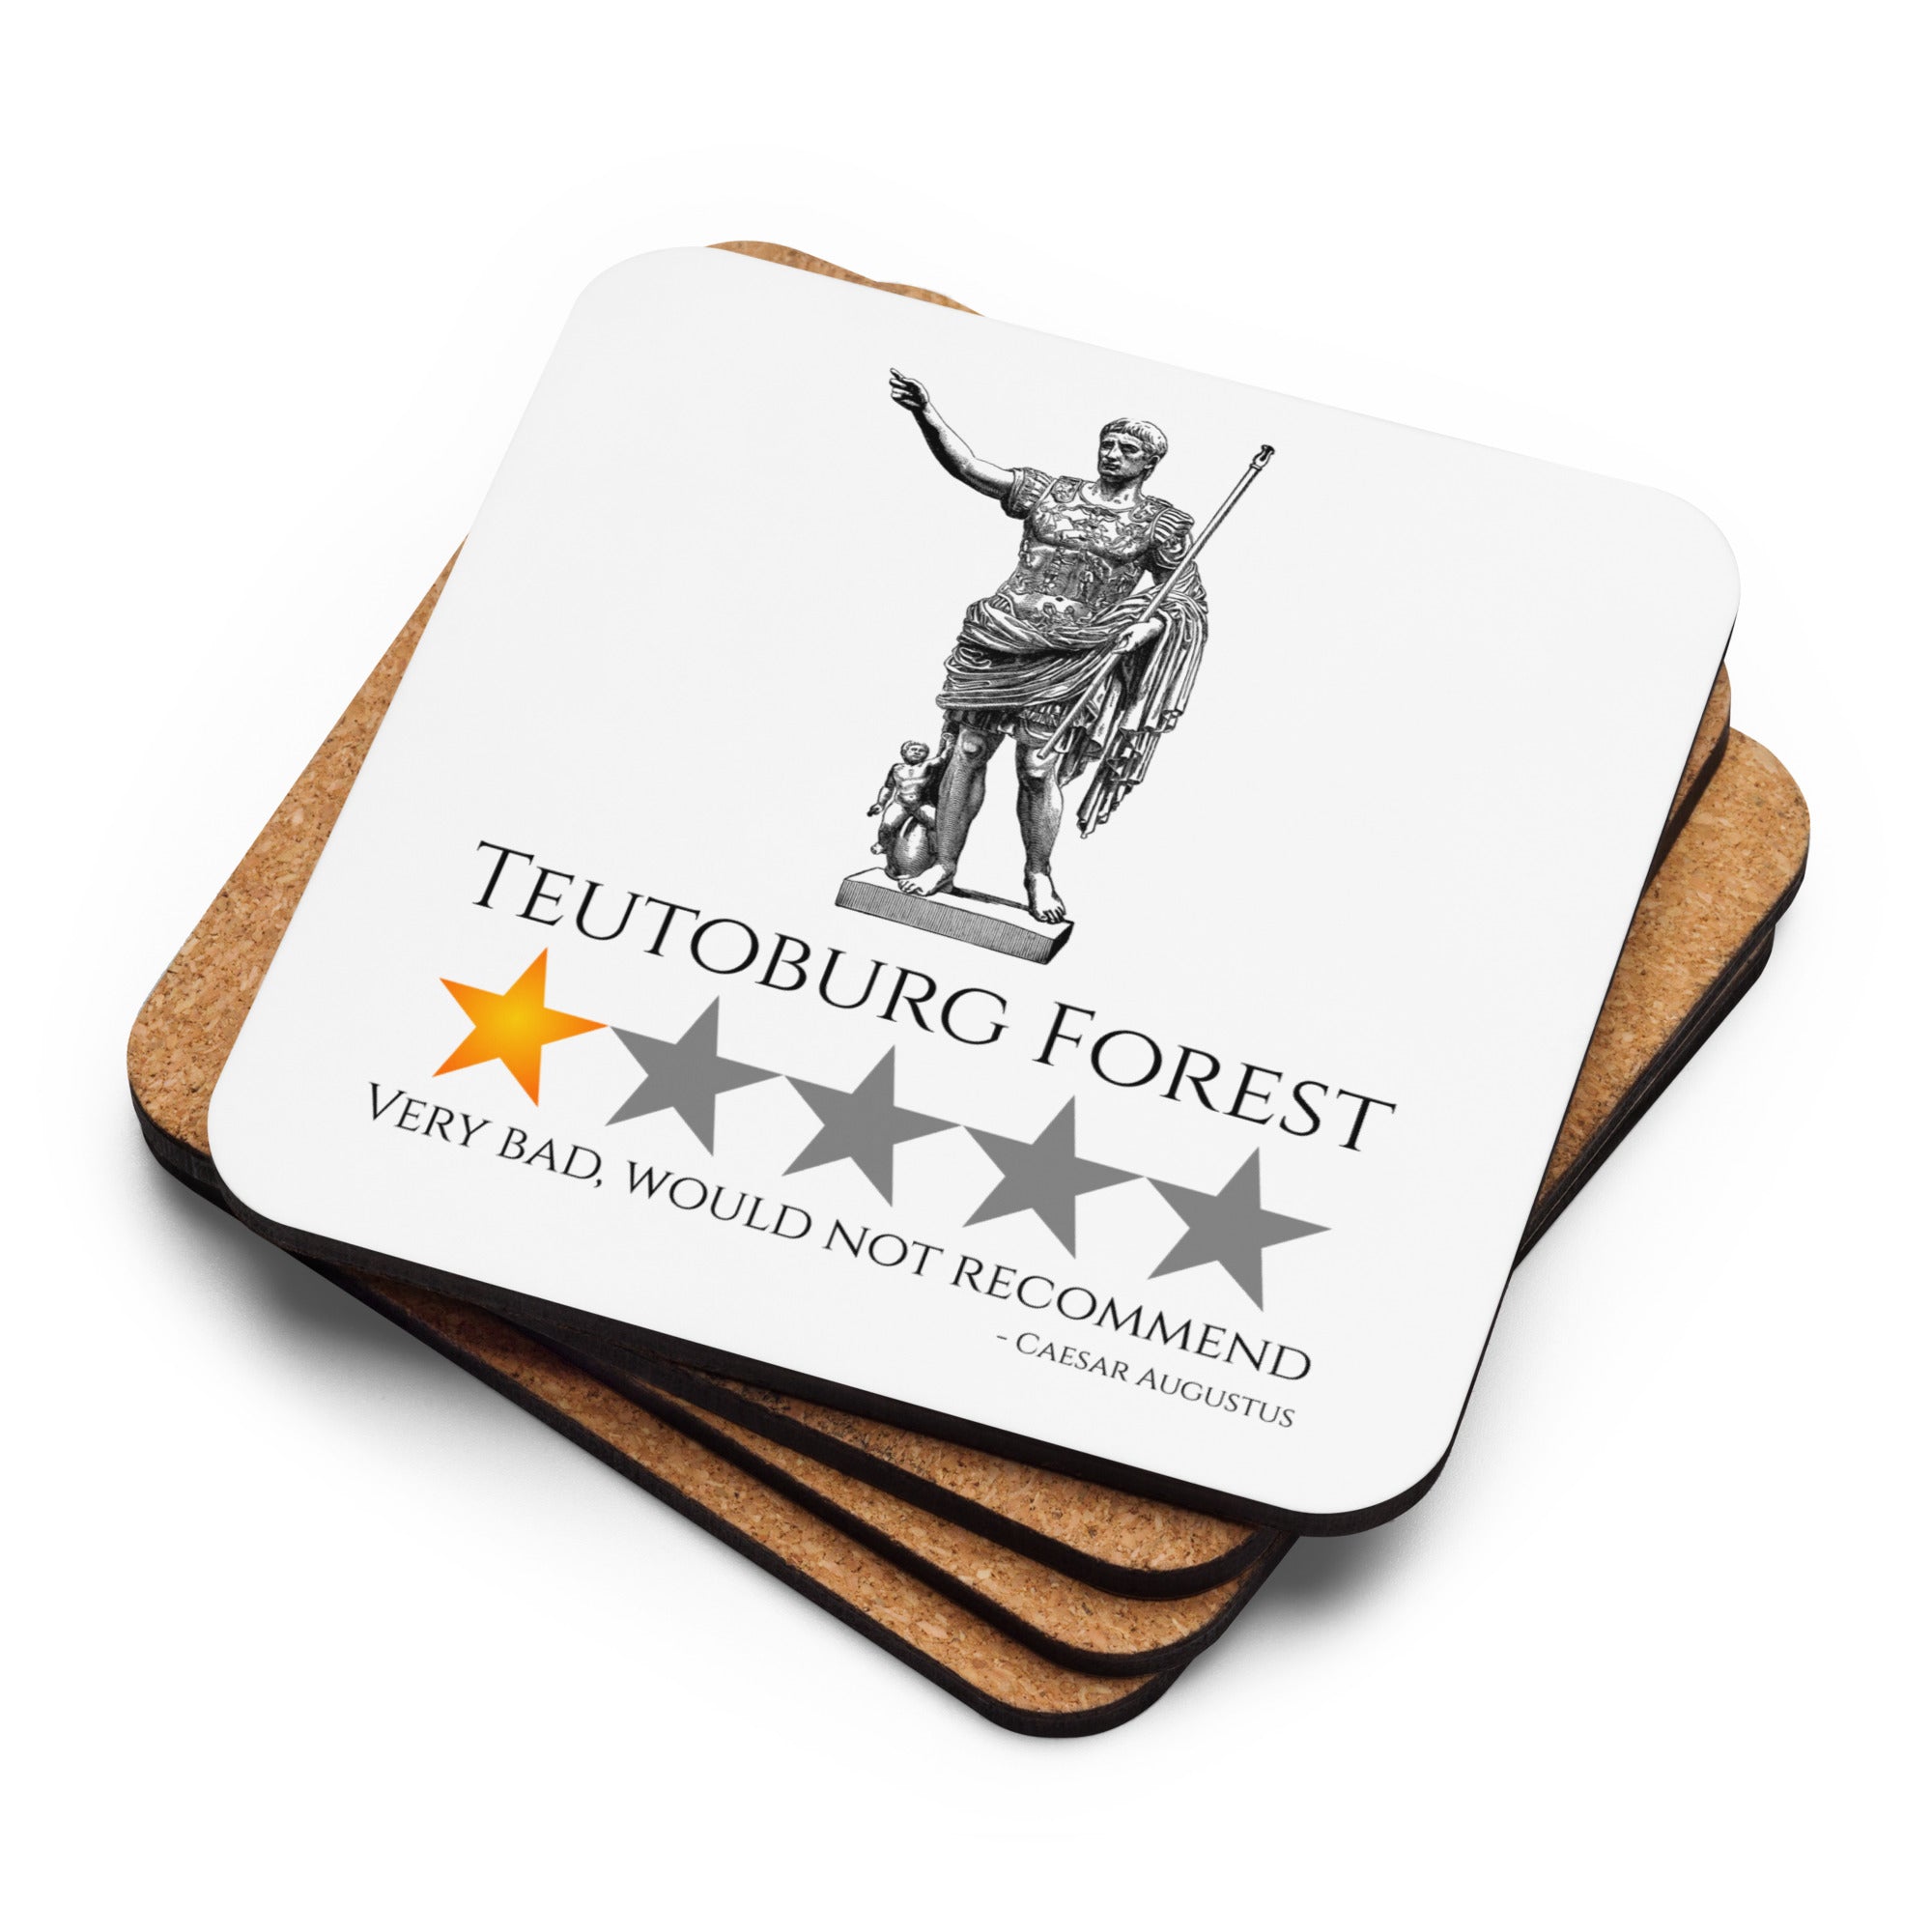 Teutoburg Forest - Caesar Augustus - Ancient Rome Cork-Back Coaster